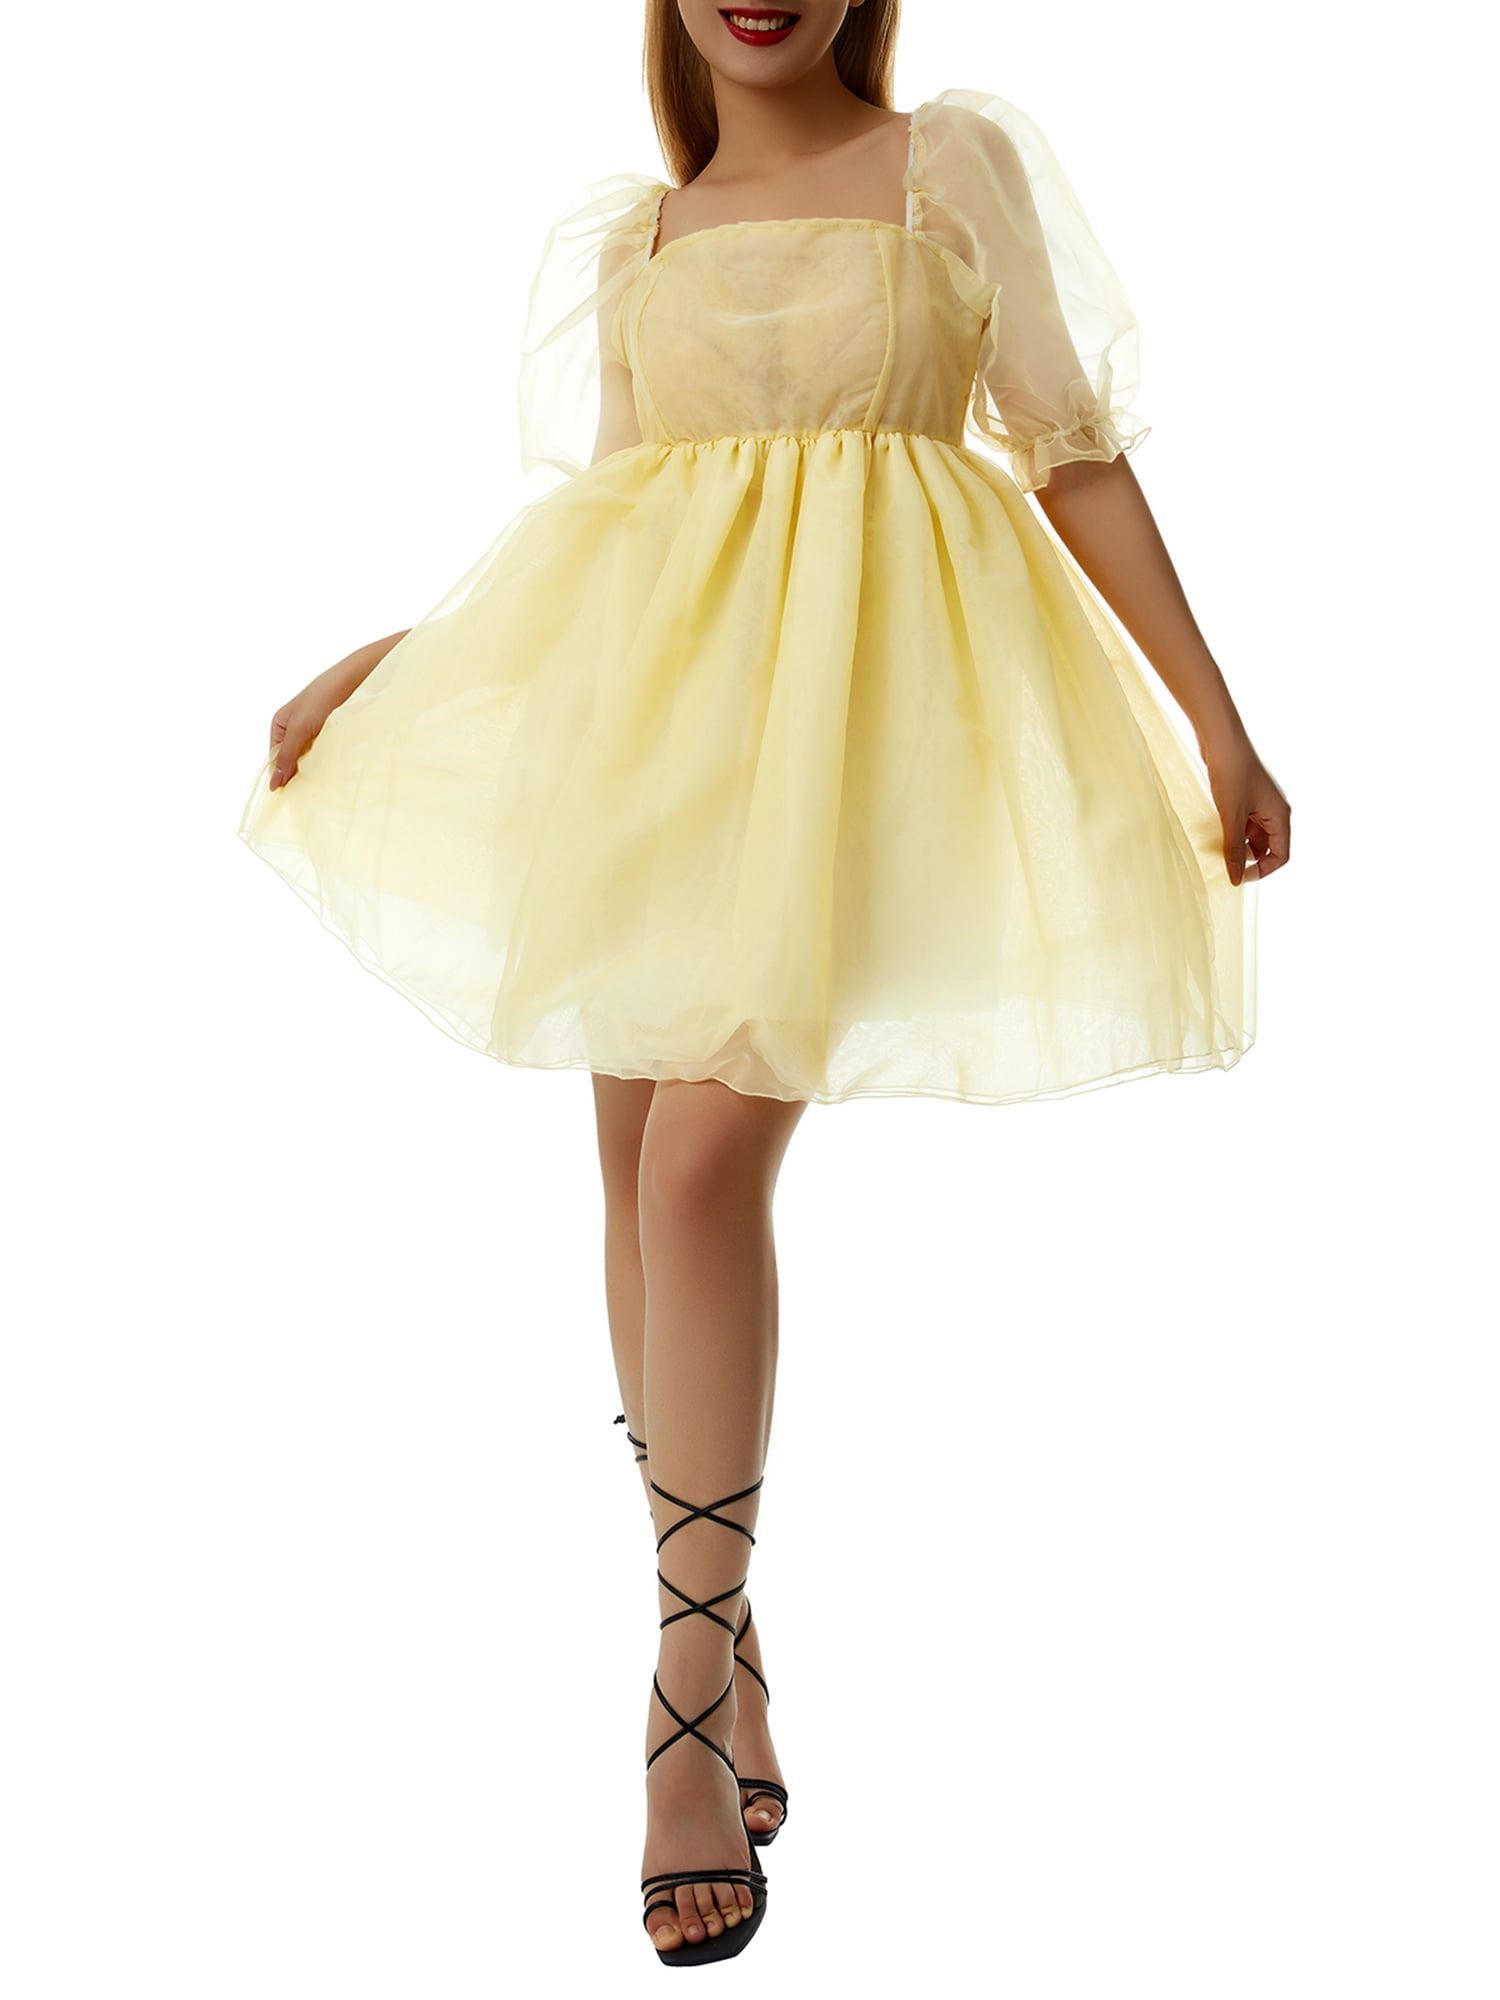 Fullvigor Women Mesh Princess Dress Solid Color Puff Sleeve One-piece